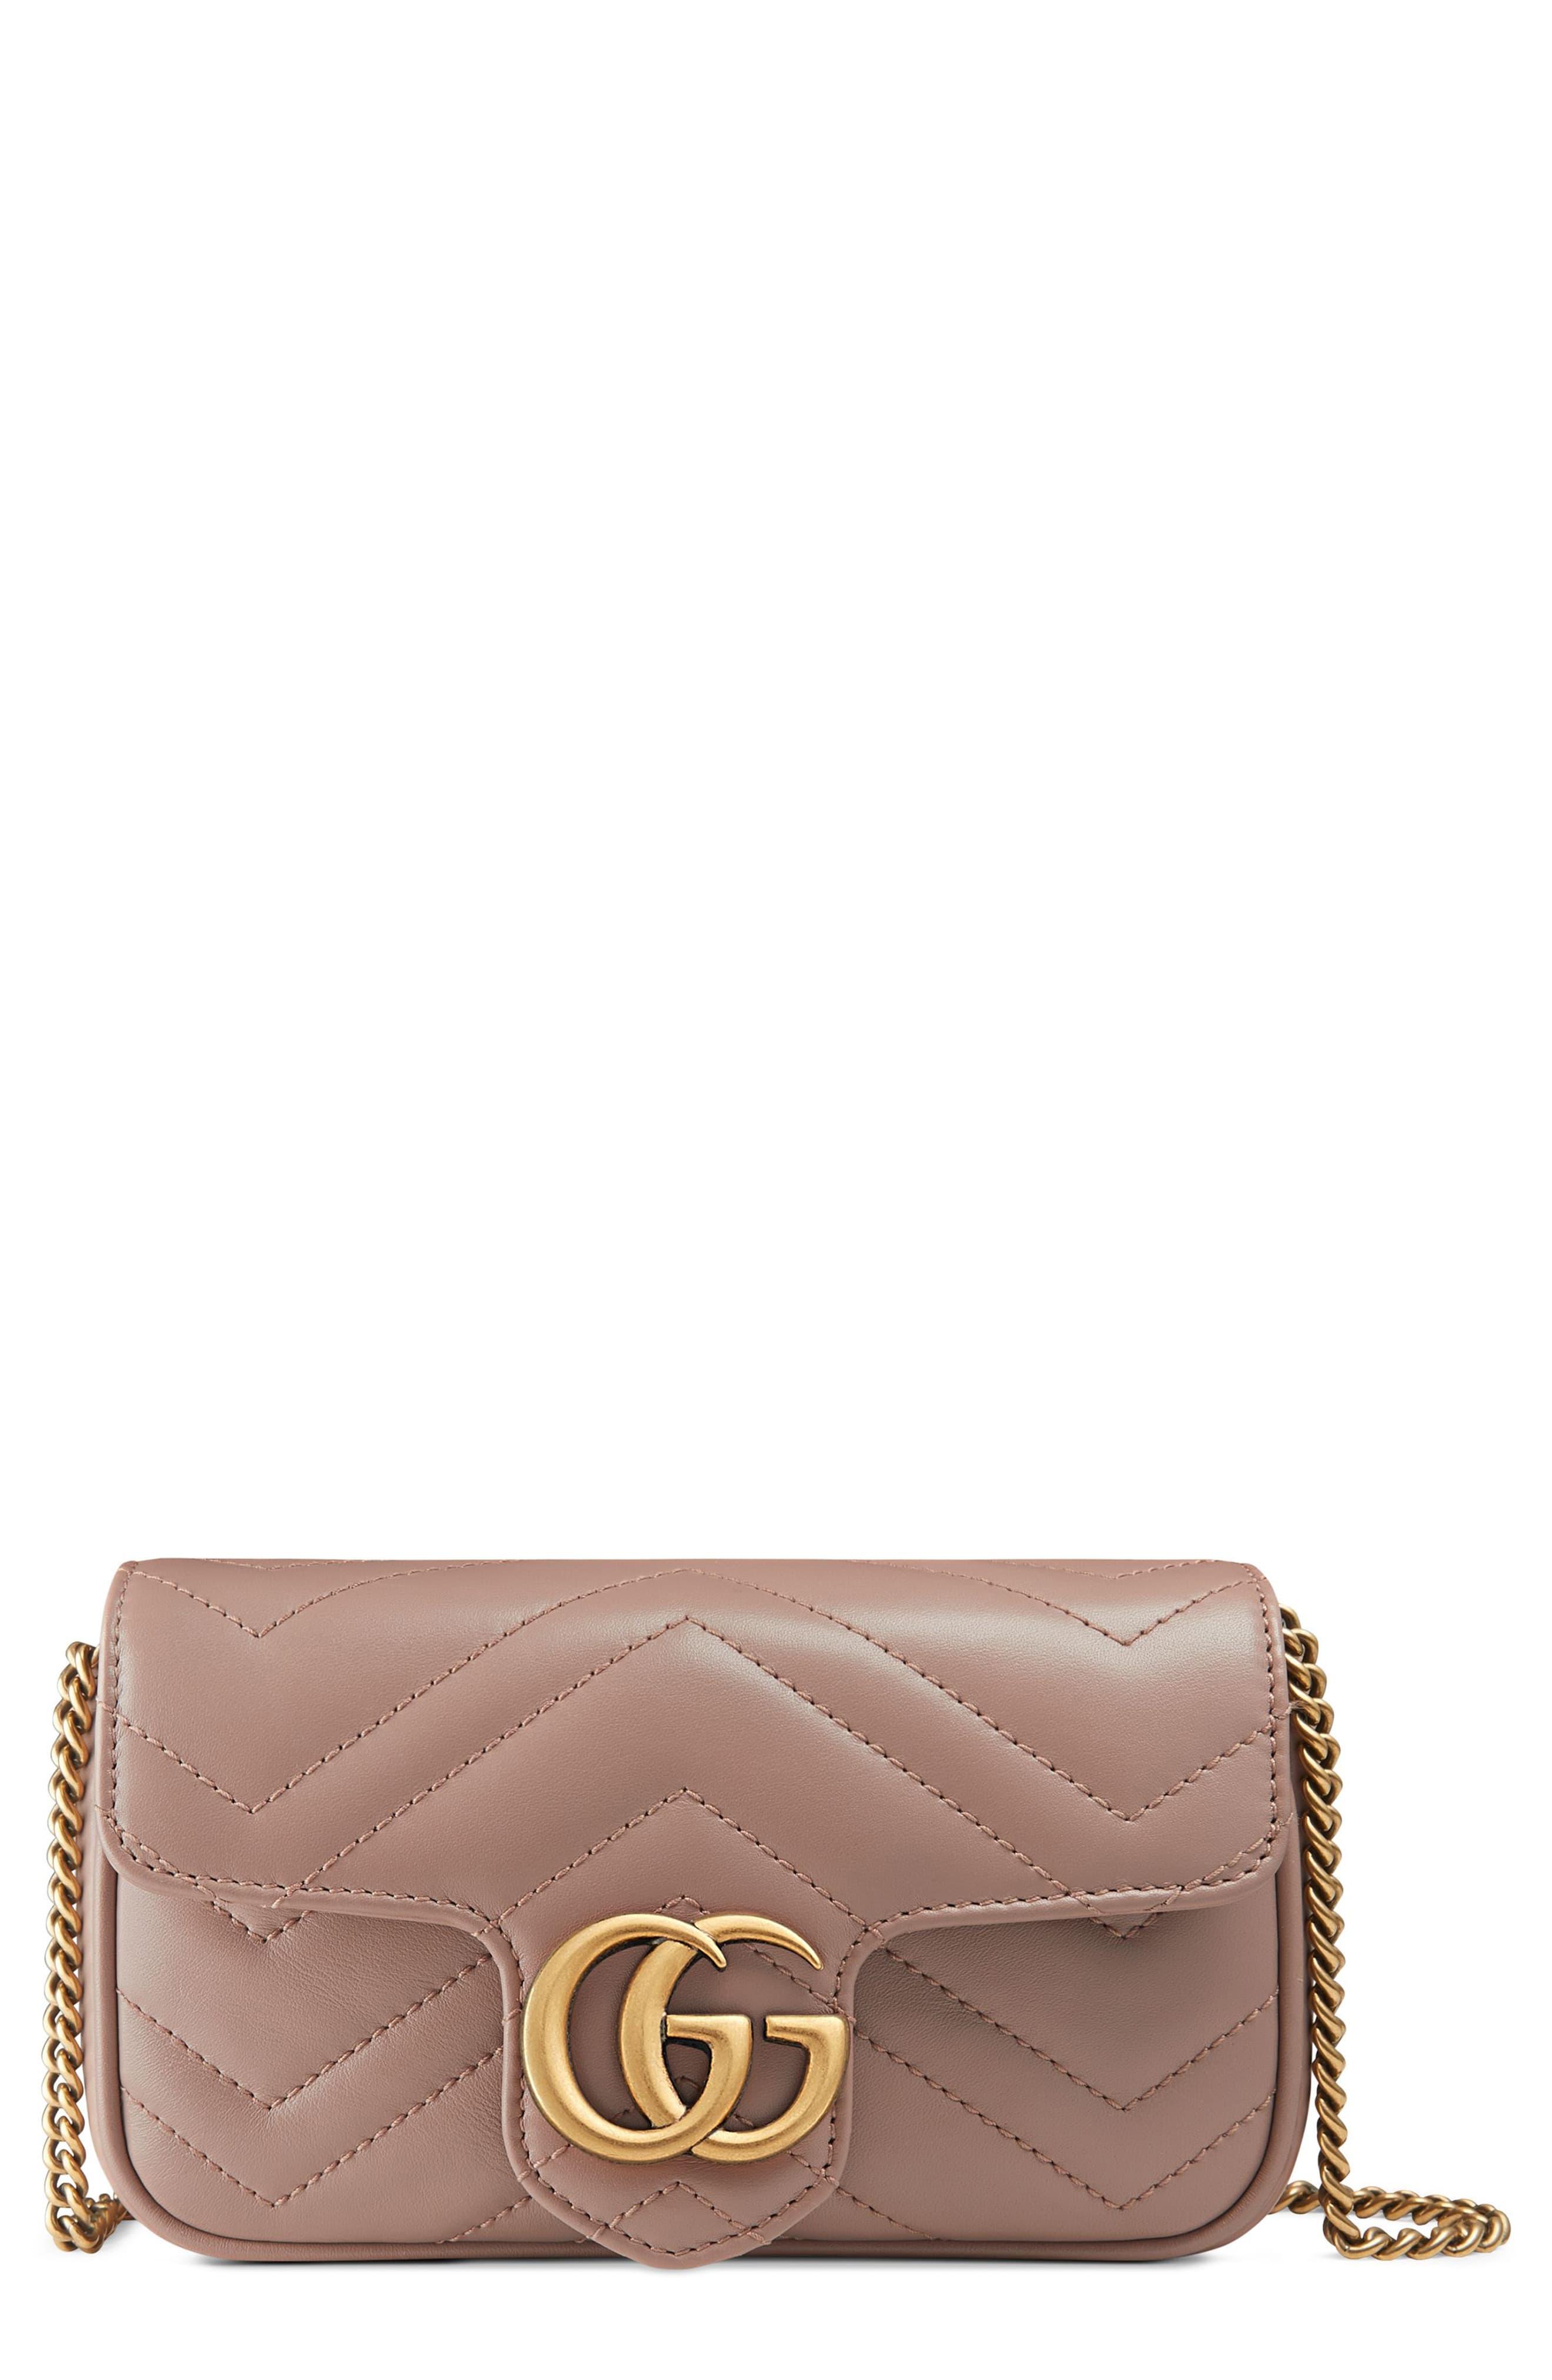 Gucci Supermini Gg Marmont 2.0 Matelassé Leather Shoulder Bag in Antique Rose (Red) - Lyst